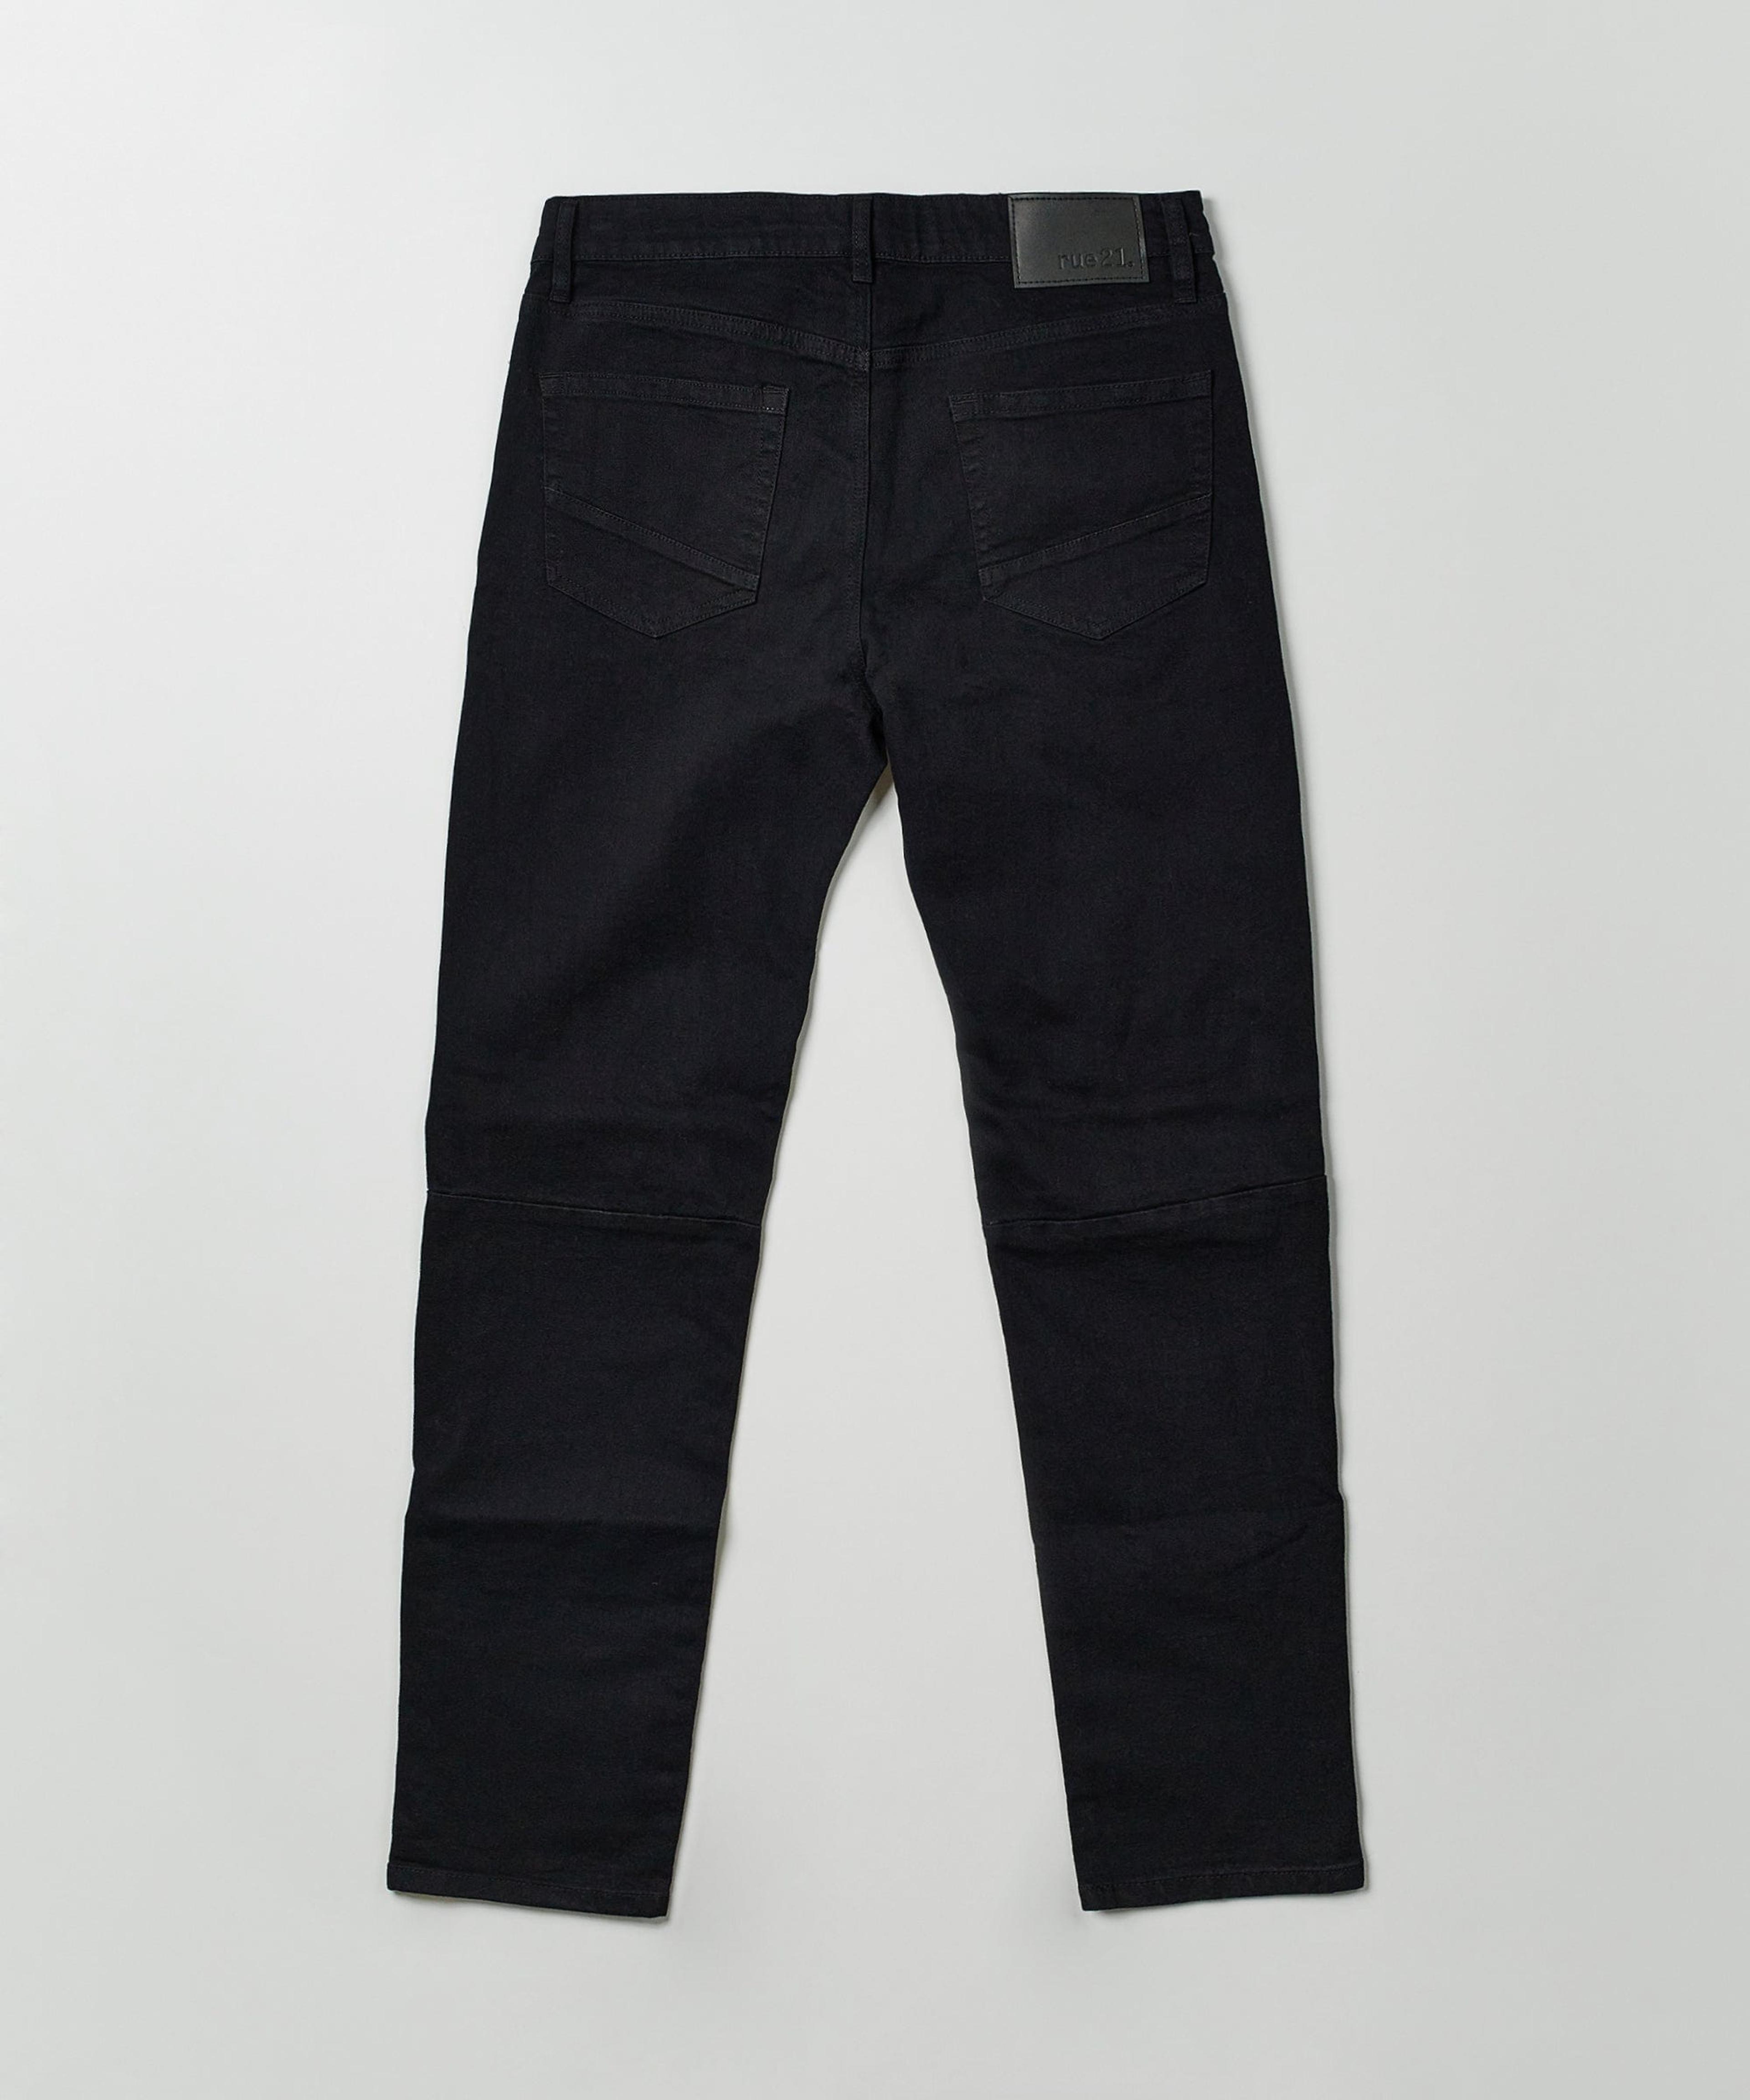 Alternate View 5 of Pike Bandana Color Back Black Denim Jeans